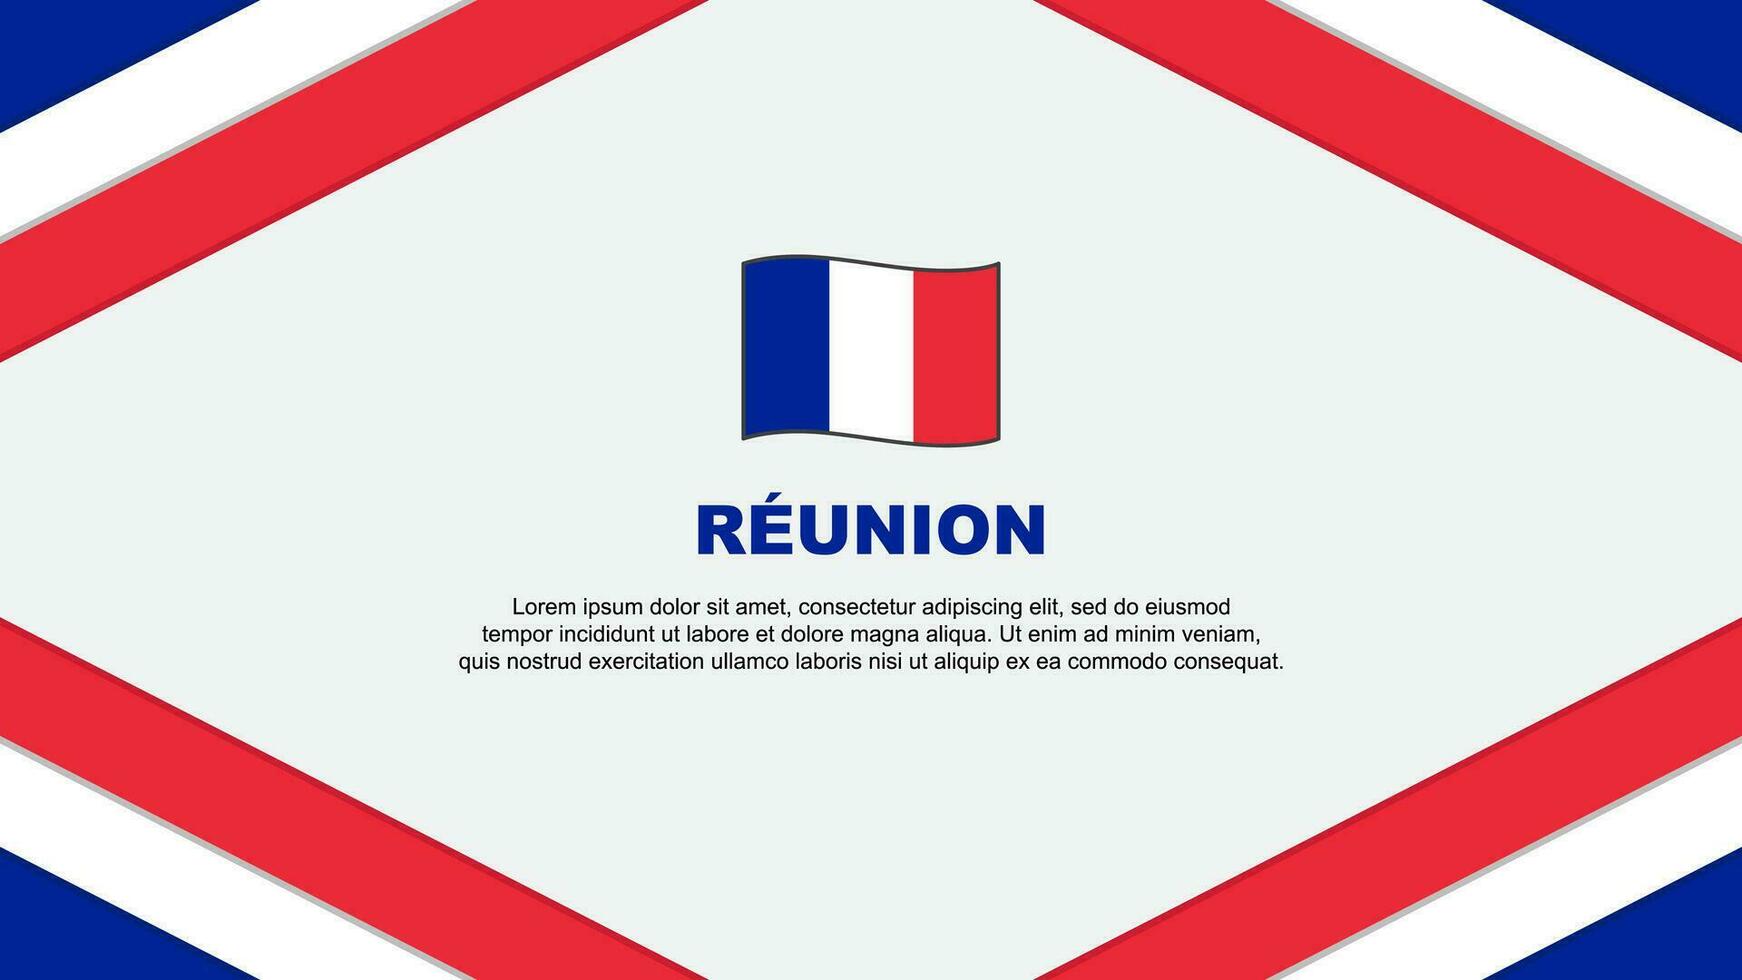 Reunion Flag Abstract Background Design Template. Reunion Template vector